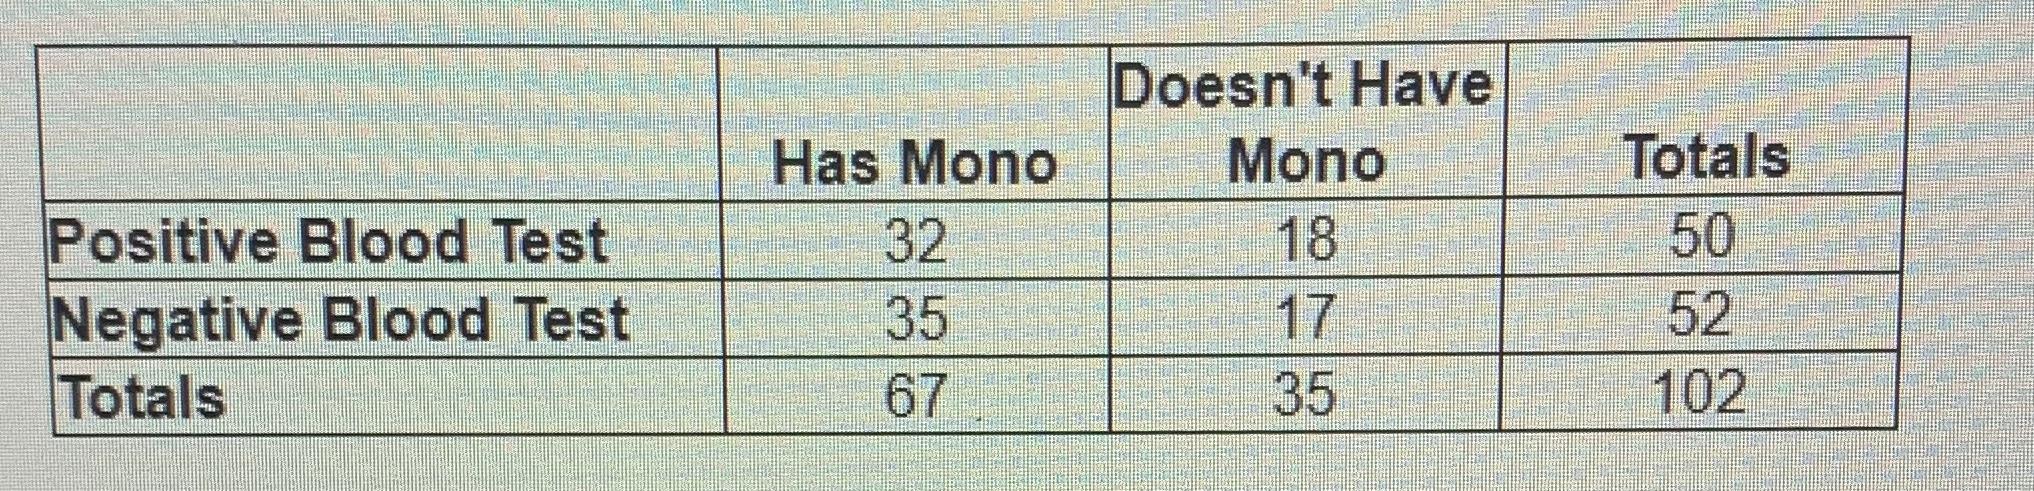 mono blood test